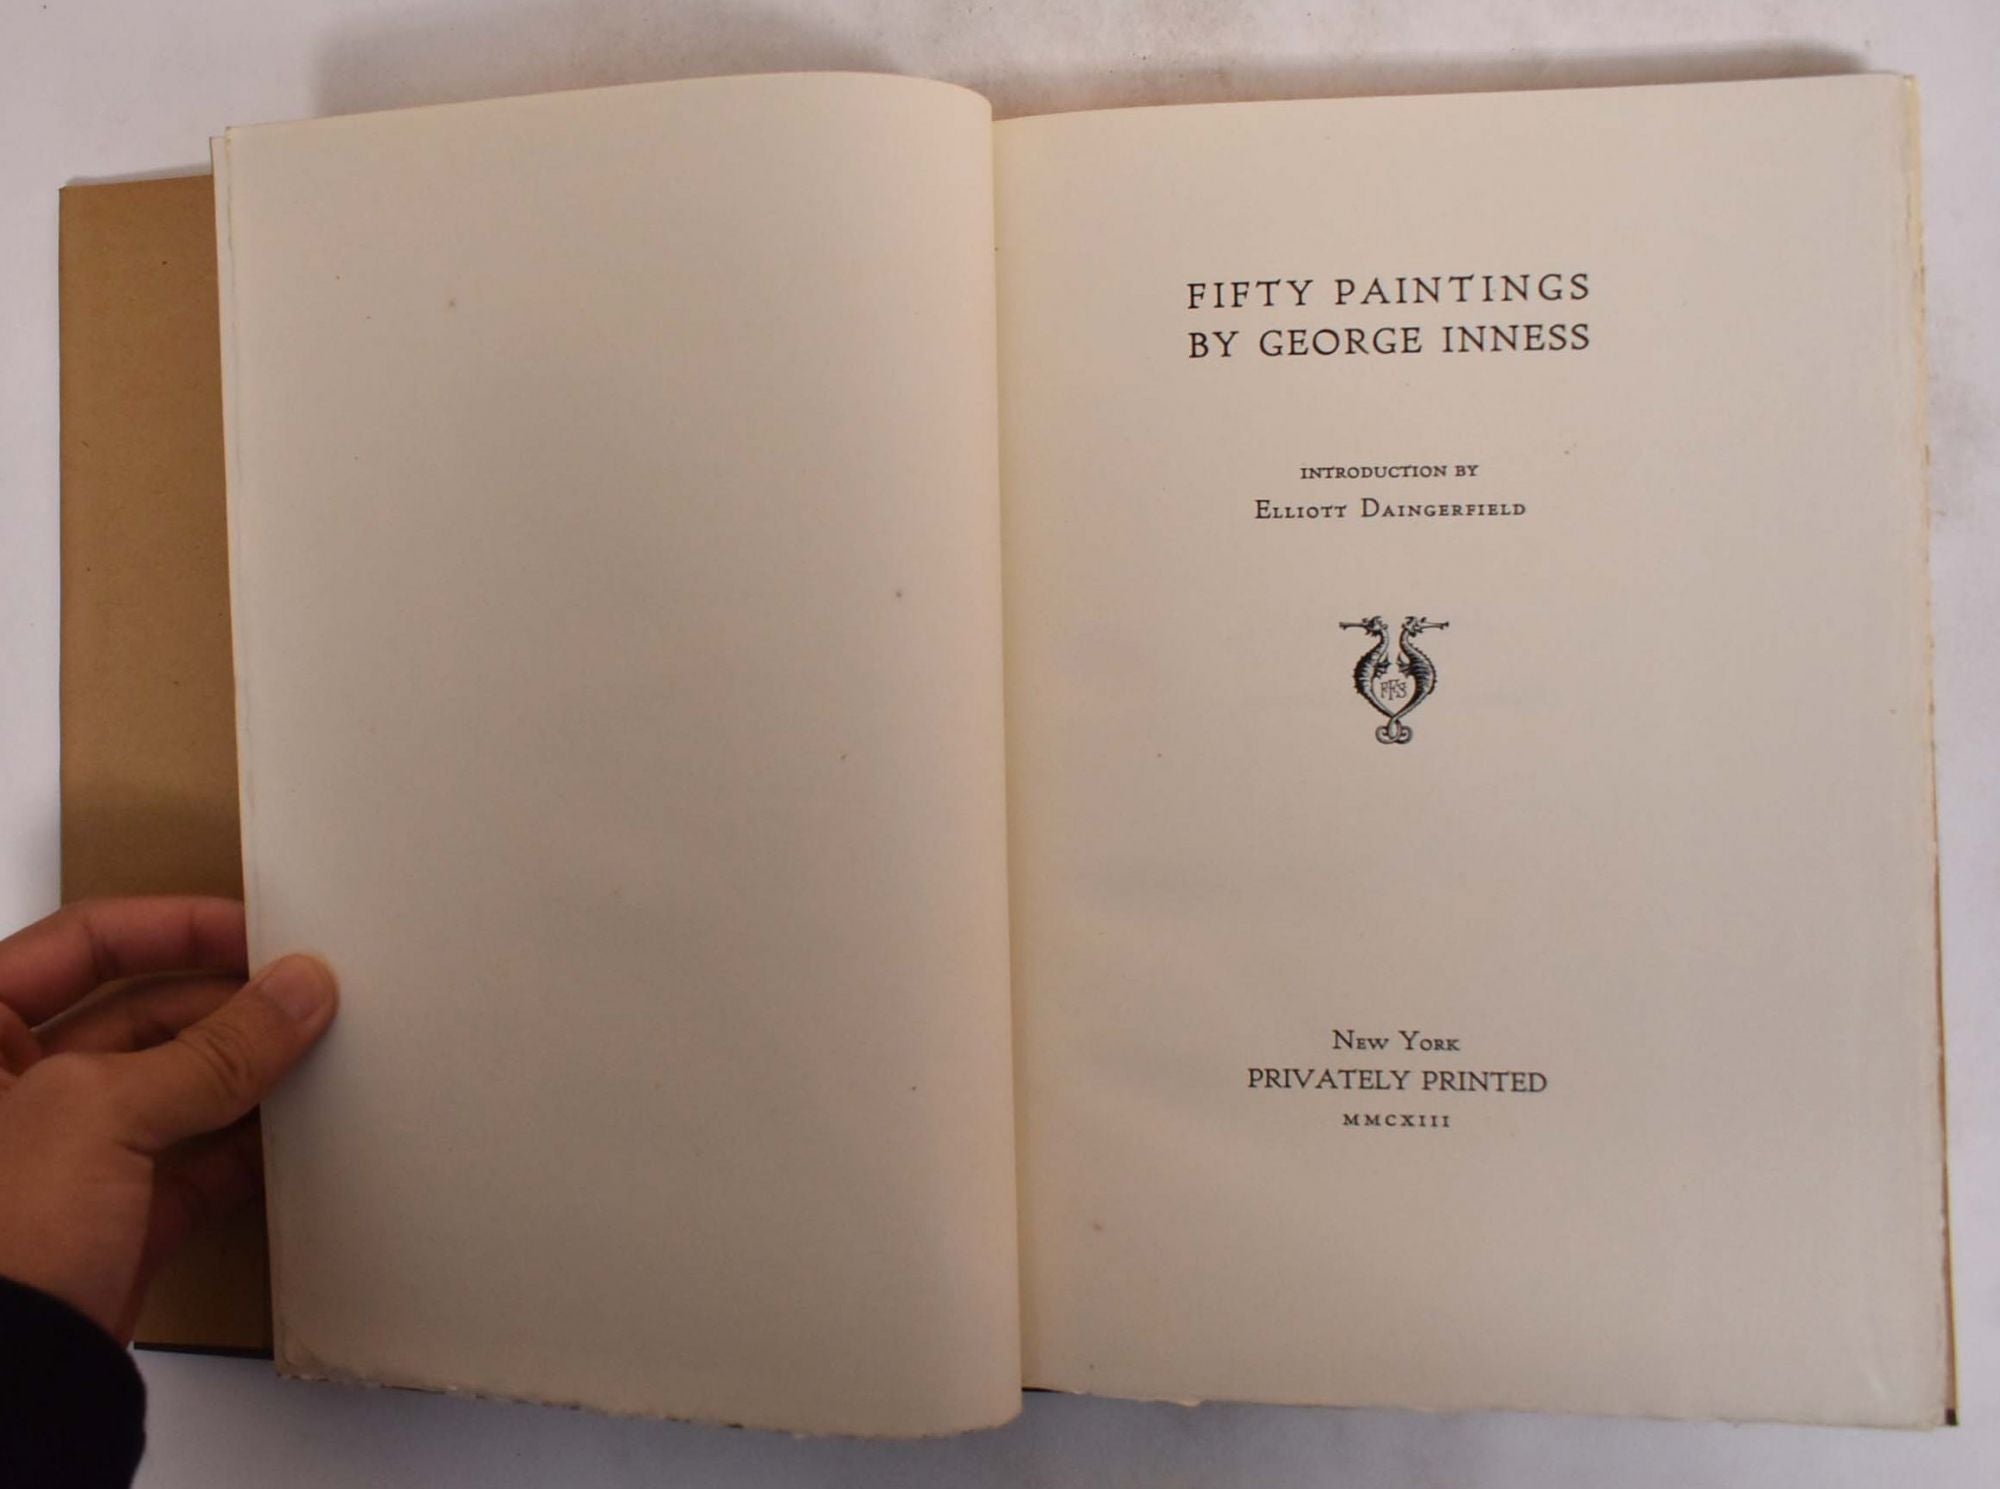 Daingerfield, Elliott - Fifty Paintings by George Inness